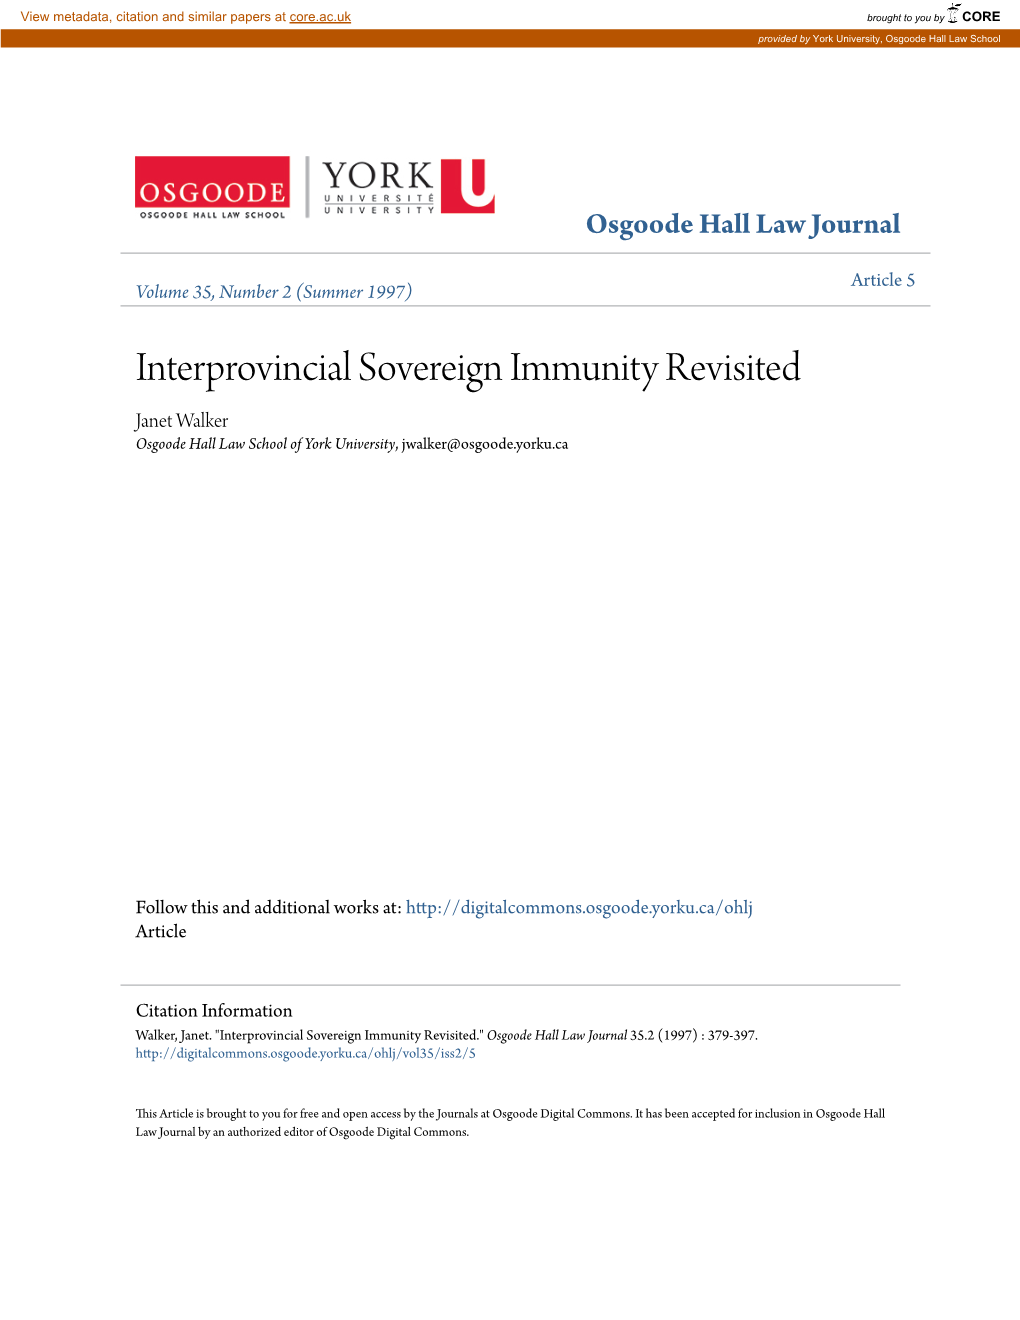 Interprovincial Sovereign Immunity Revisited Janet Walker Osgoode Hall Law School of York University, Jwalker@Osgoode.Yorku.Ca